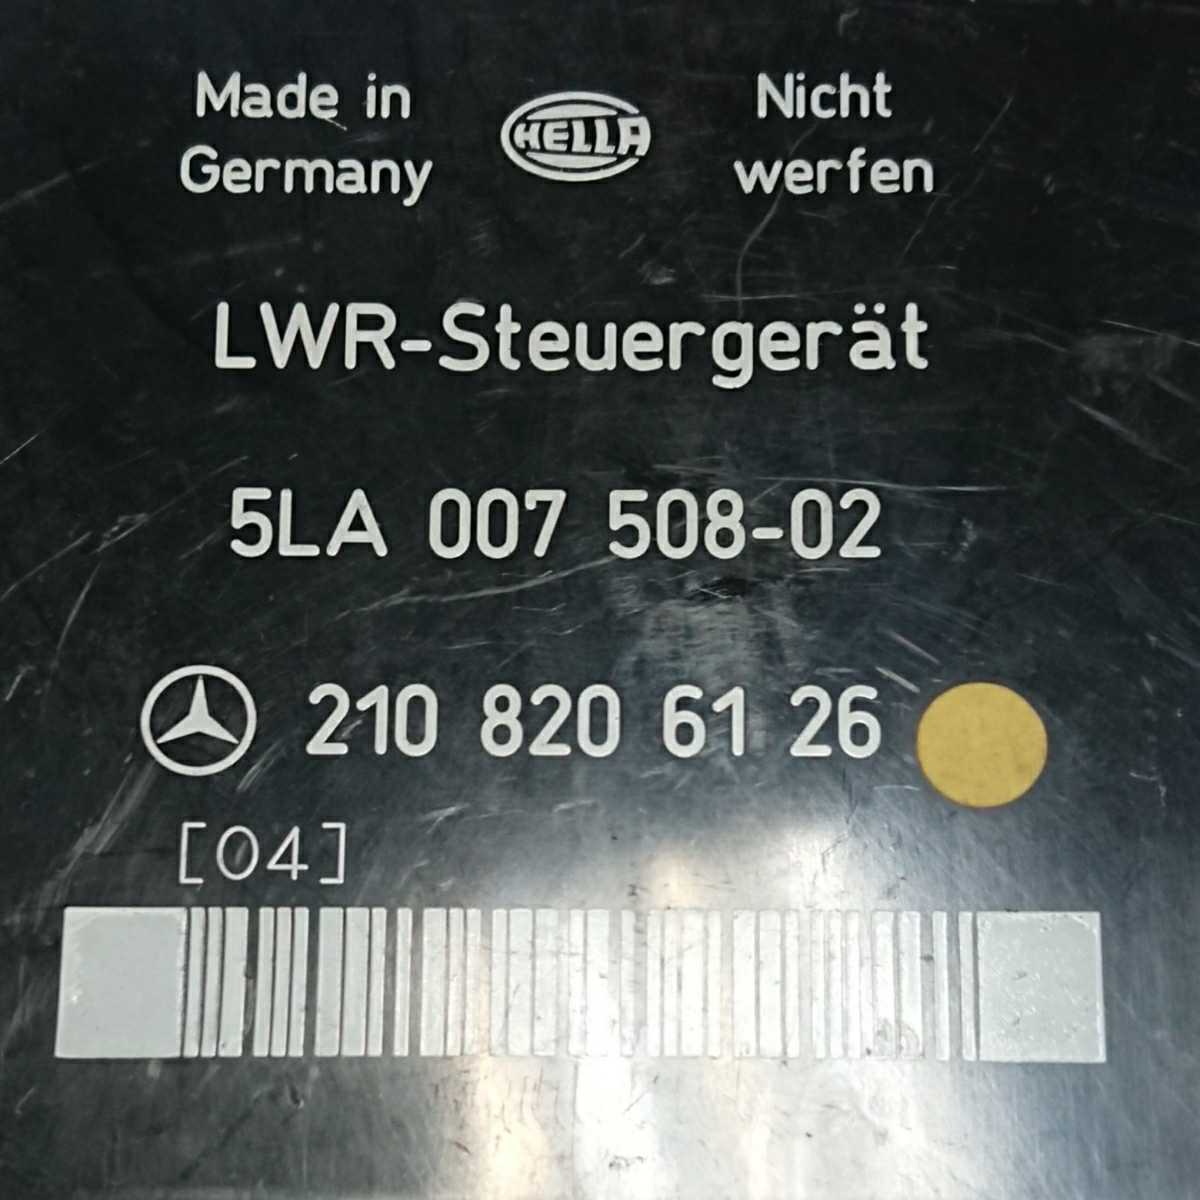 MC-81 95~02 year Mercedes * Benz W210 E Class head light lamp range control module 210 820 61 26